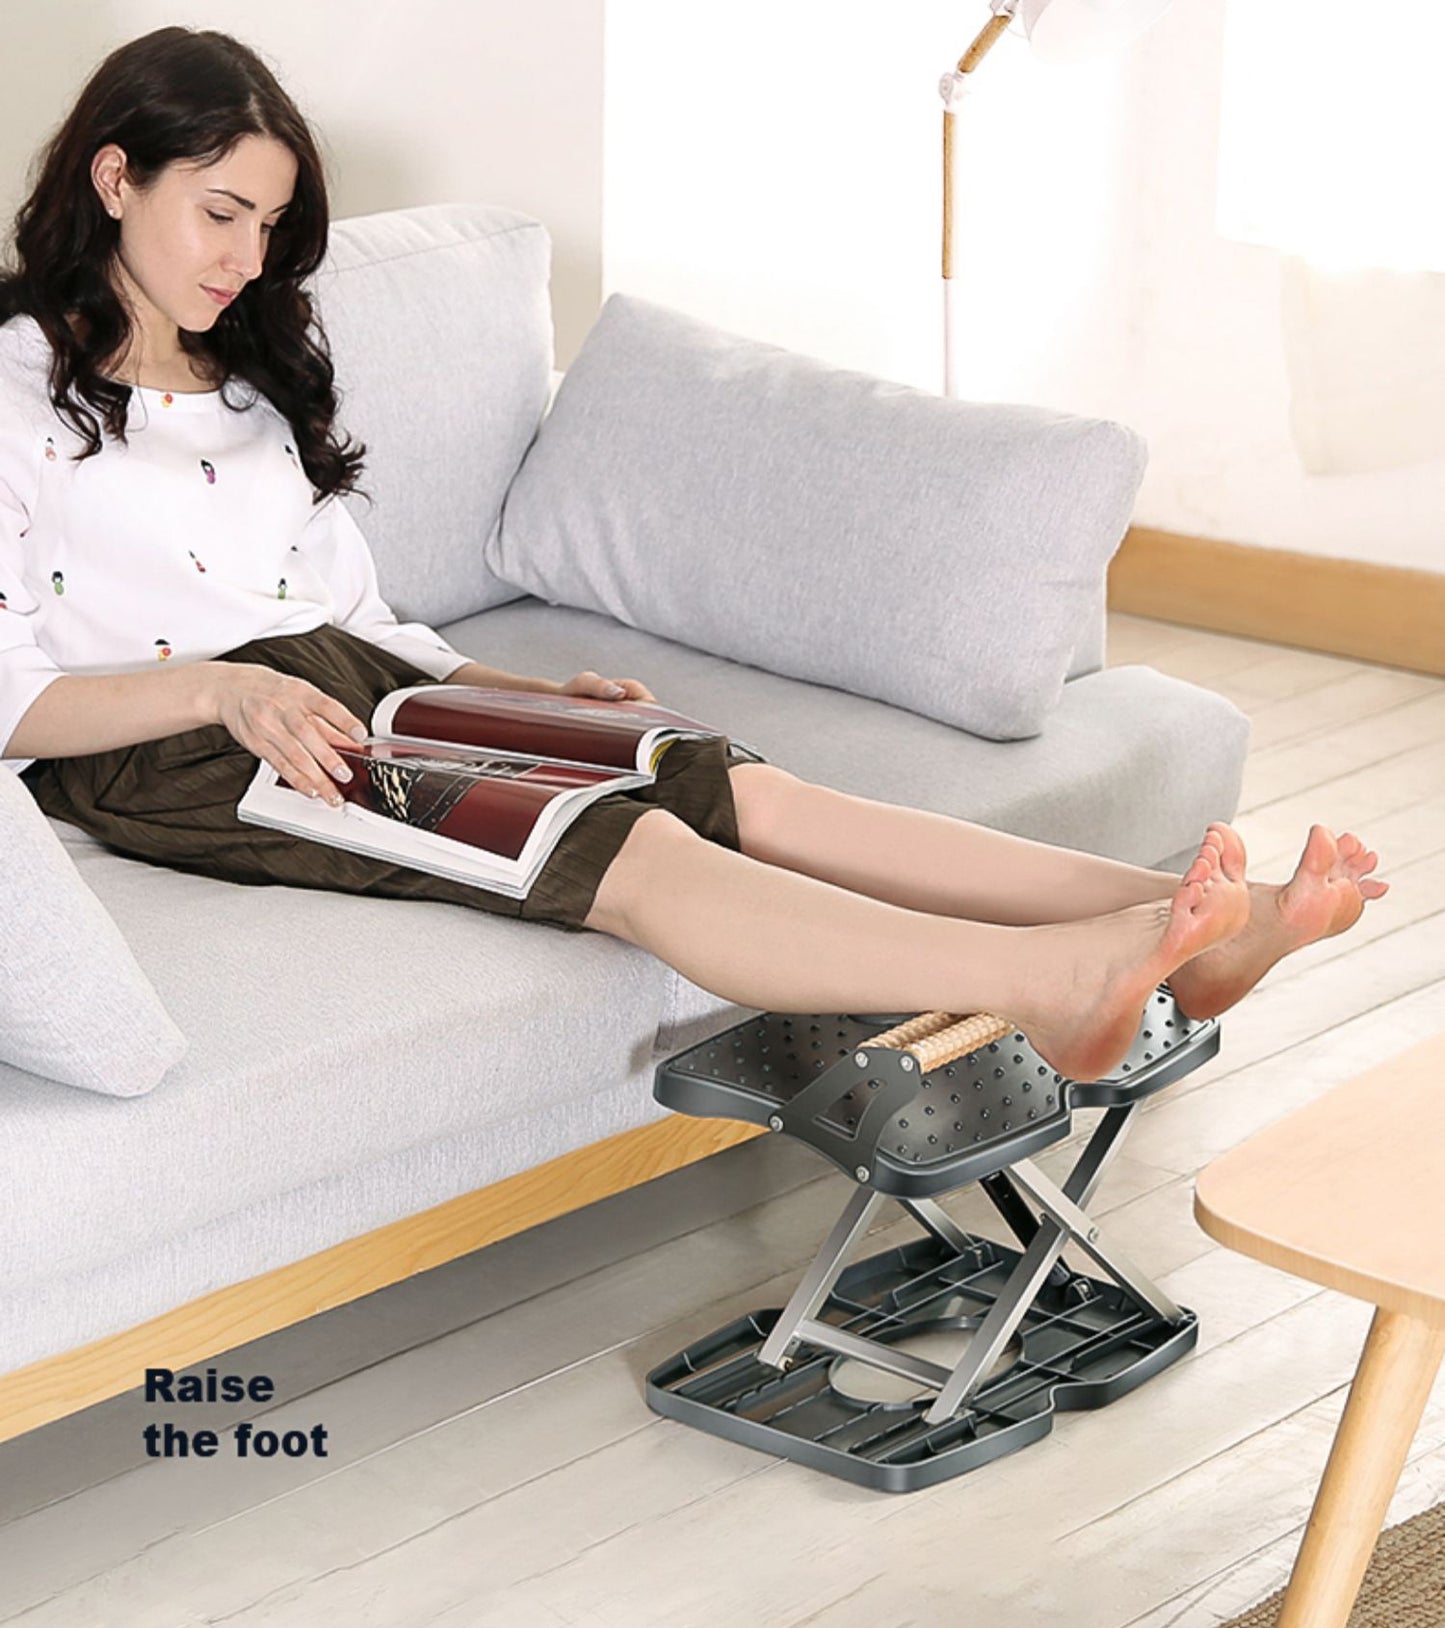 Adjustable Height Foot Rest Under Desk – AHPOON